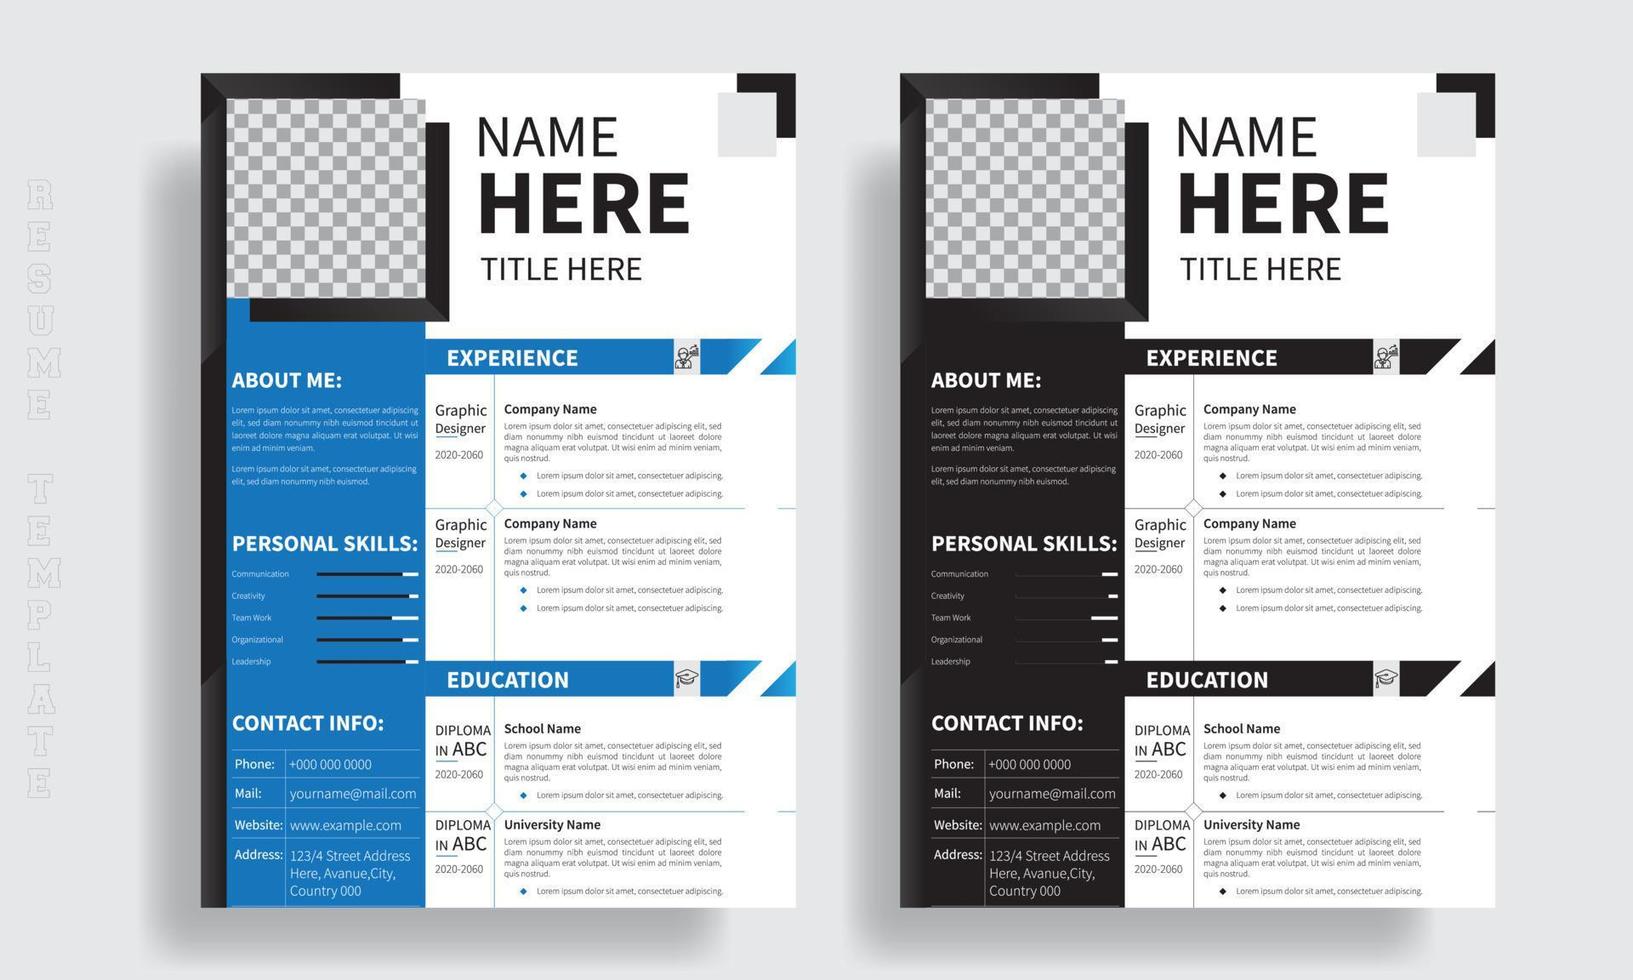 Resume Template Design For Corporate Job Applications, Creative CV resume templates Vector Design cover letter job applications colors,  cv design, multipurpose resume design, and premium designs.